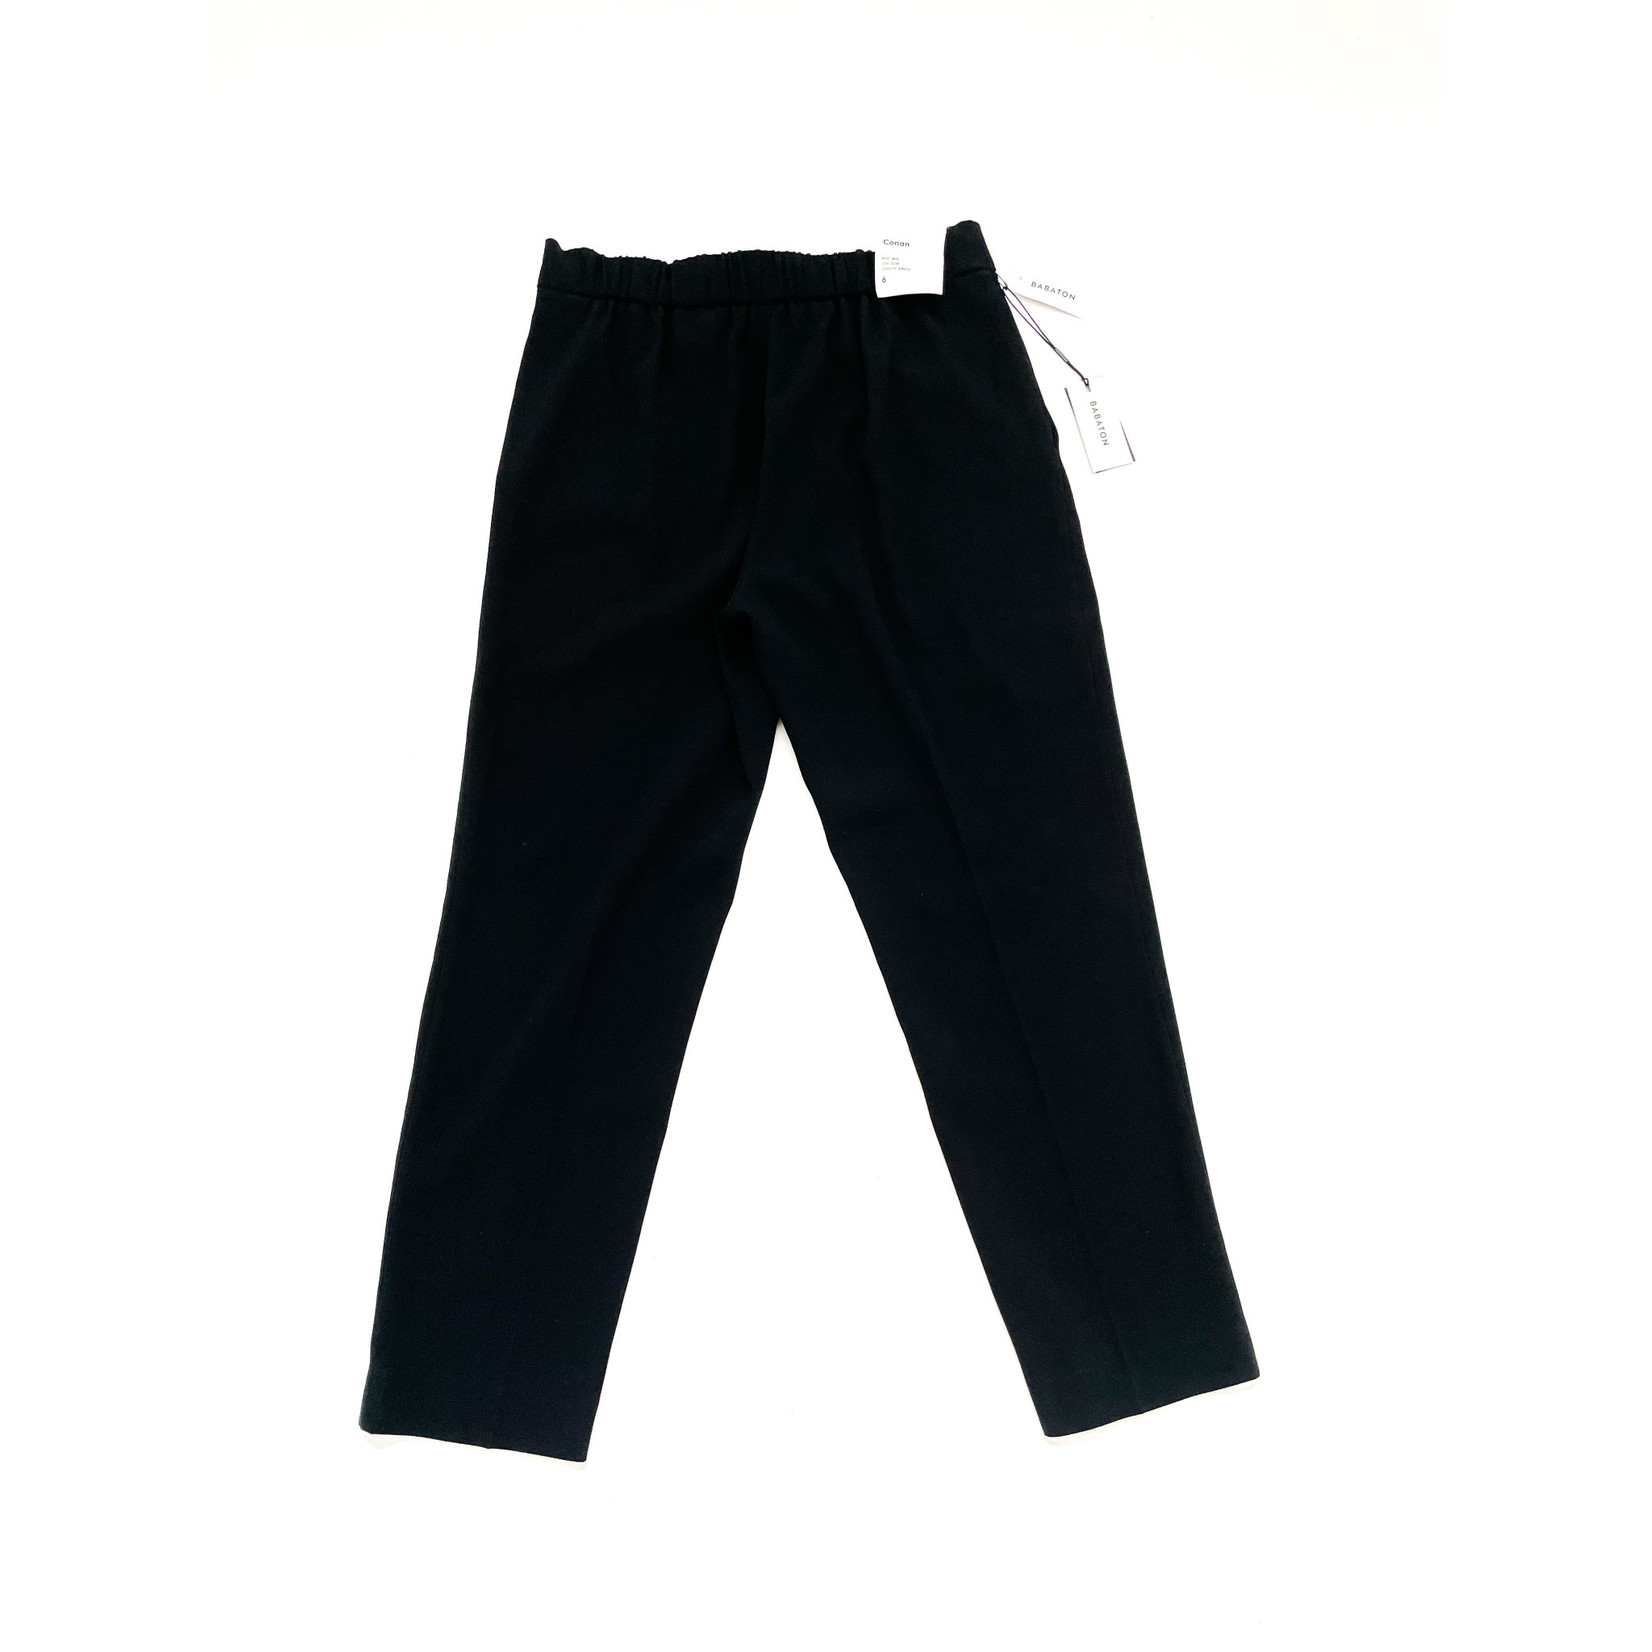 Babaton Babaton Atelier Conan Dress Pants - Size 6